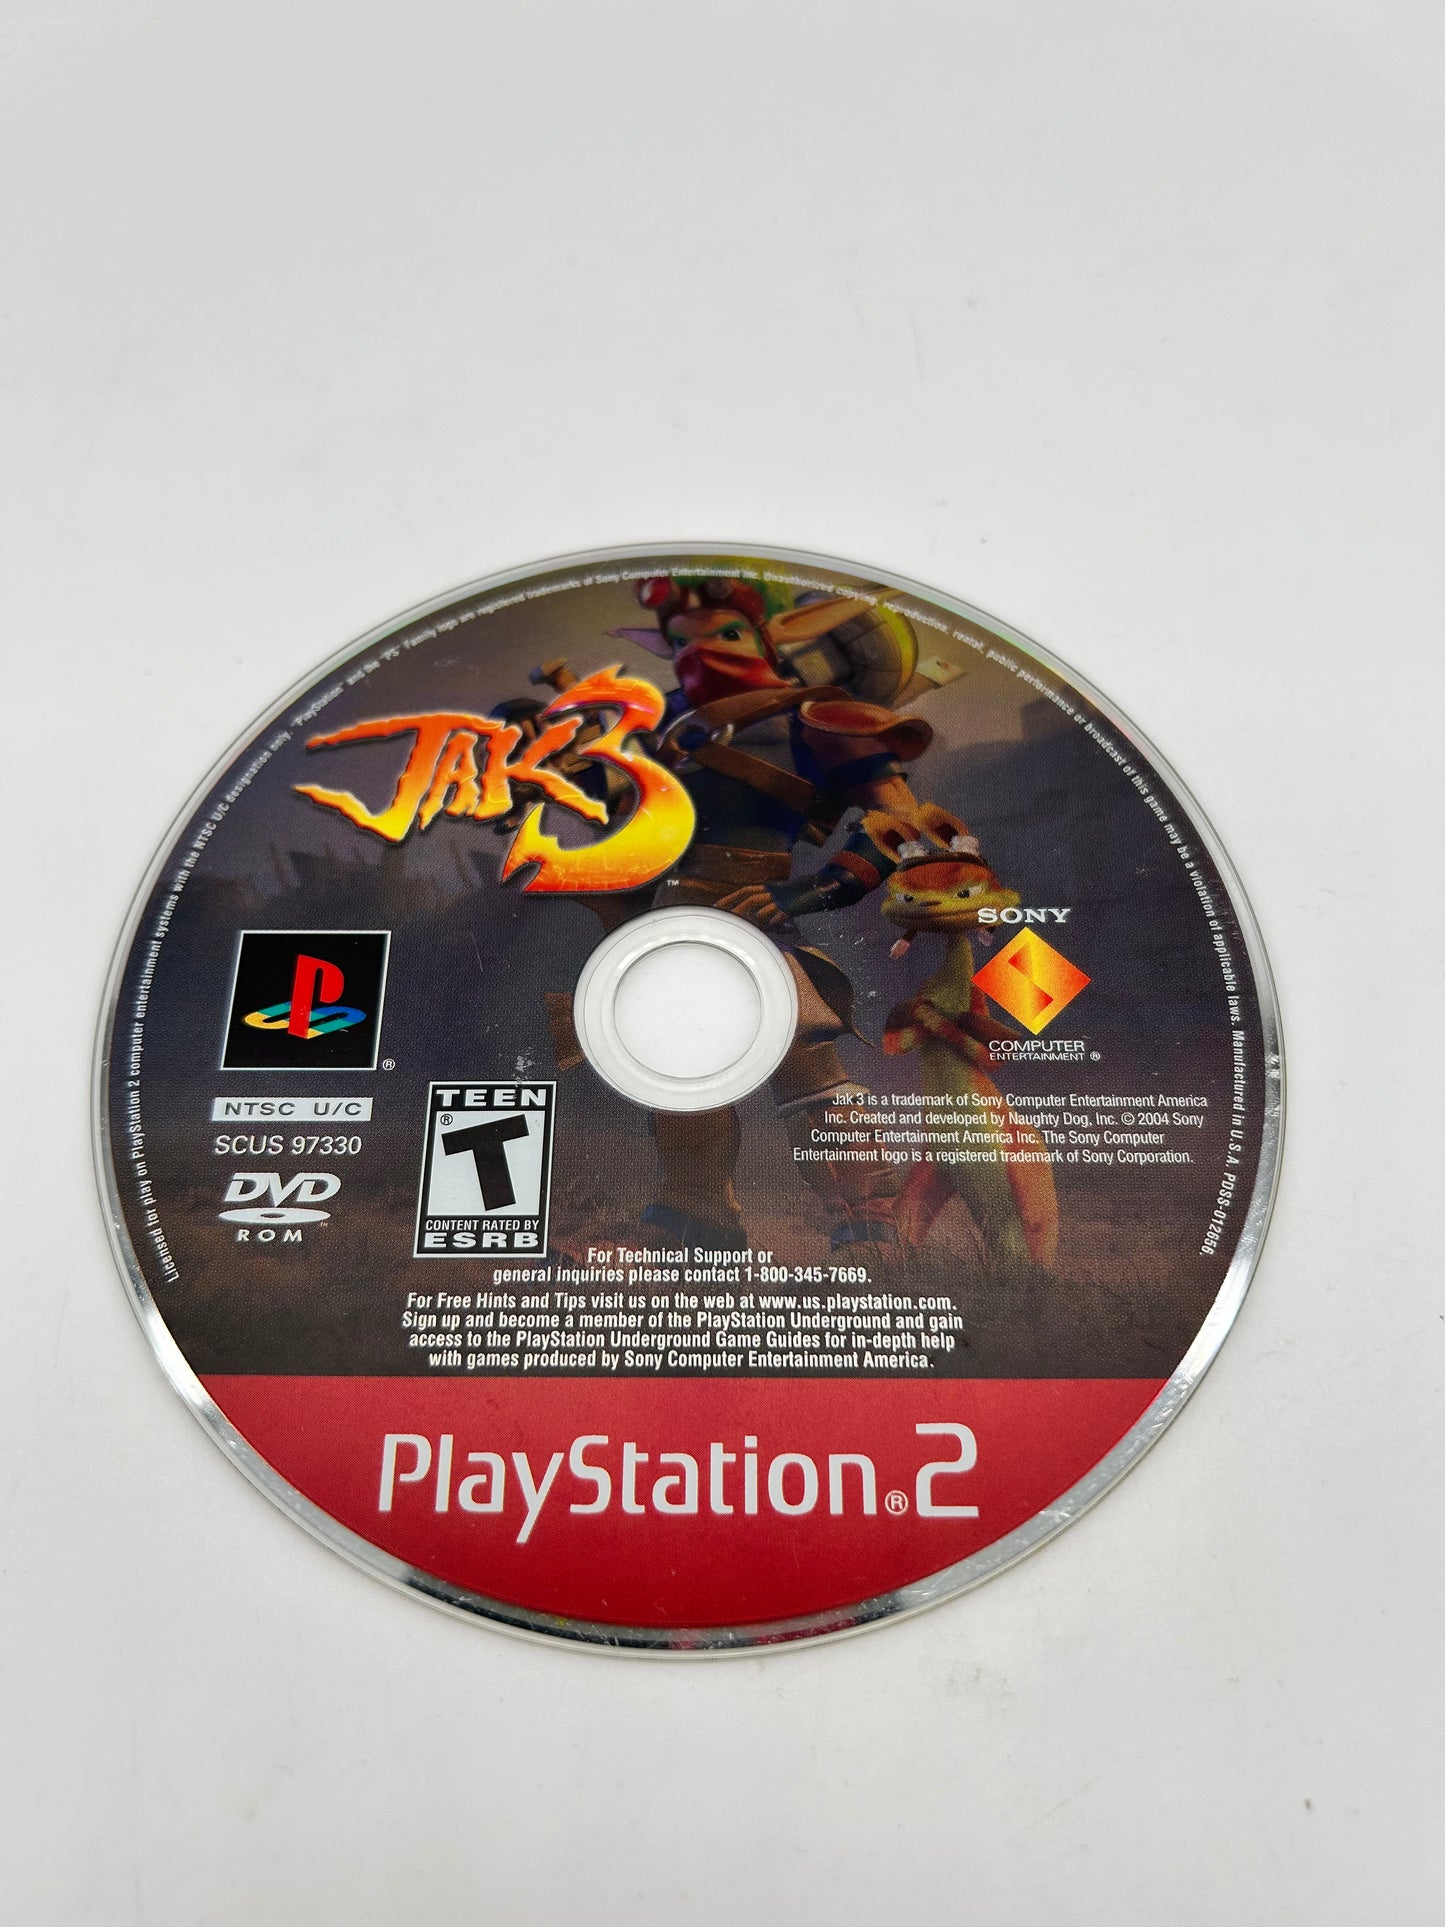 PiXEL-RETRO.COM : SONY PLAYSTATION 2 (PS2) GAME NTSC JAK 3